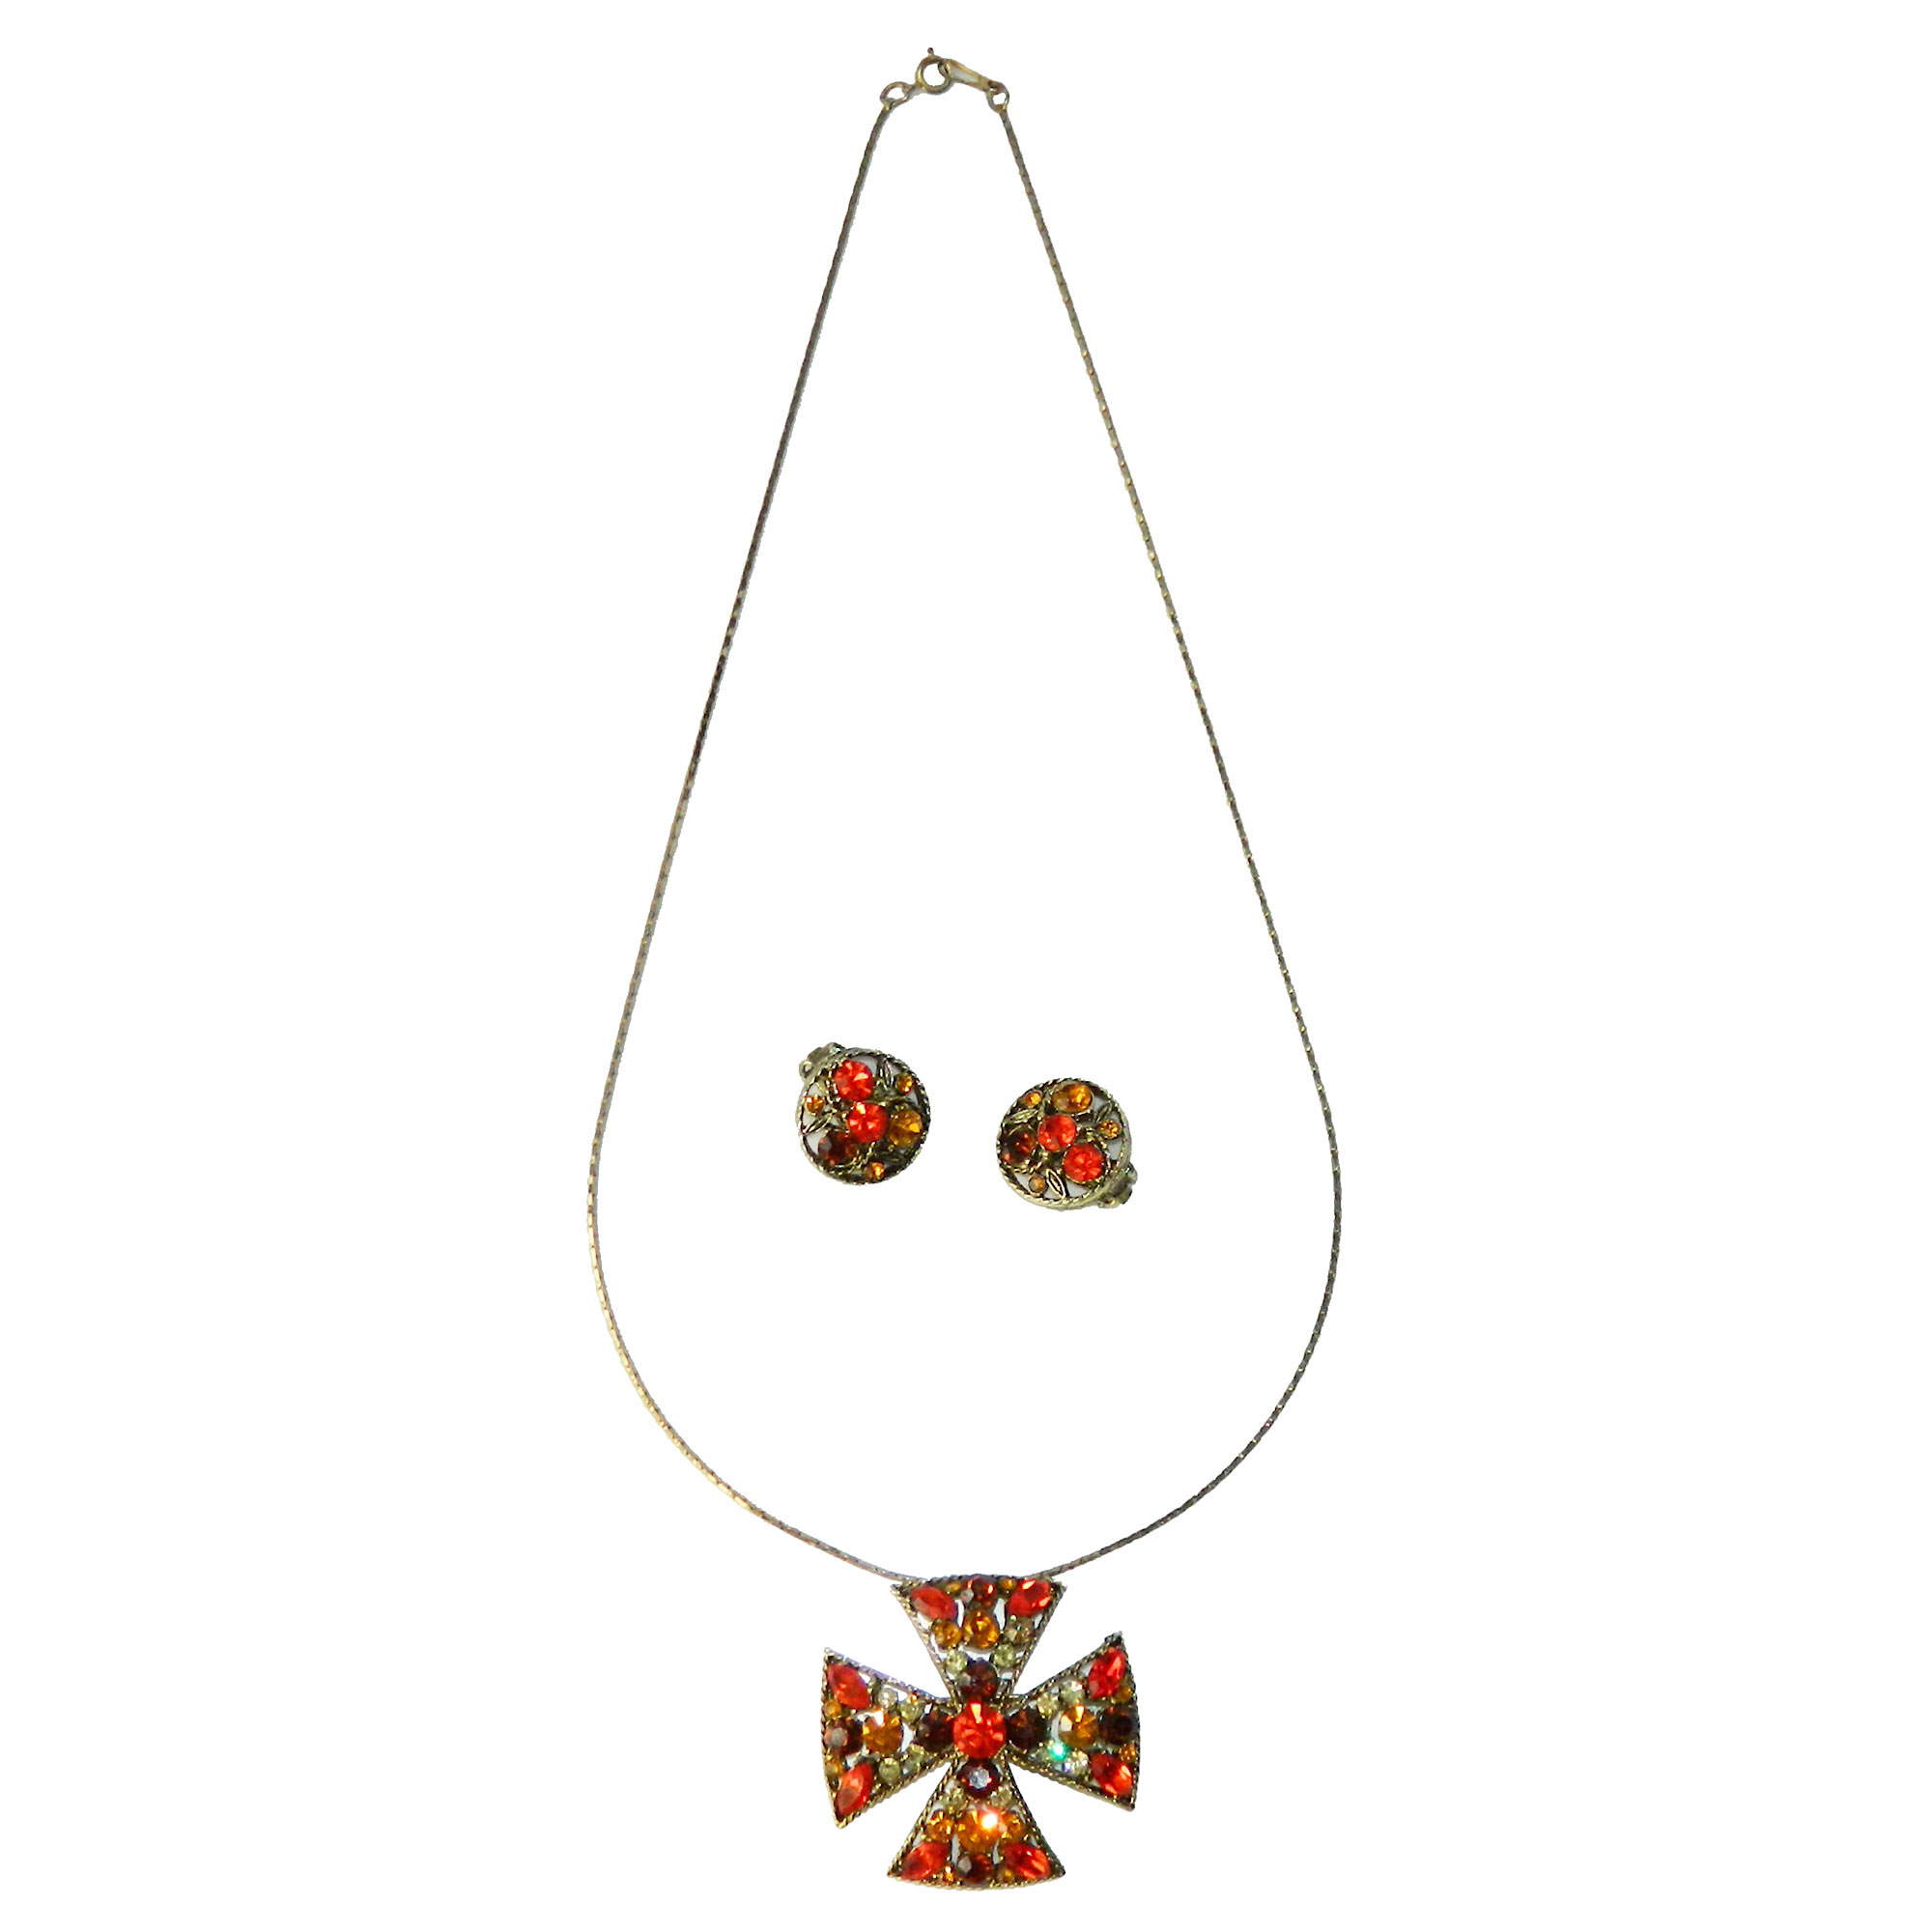 Maltese cross pendant necklace set